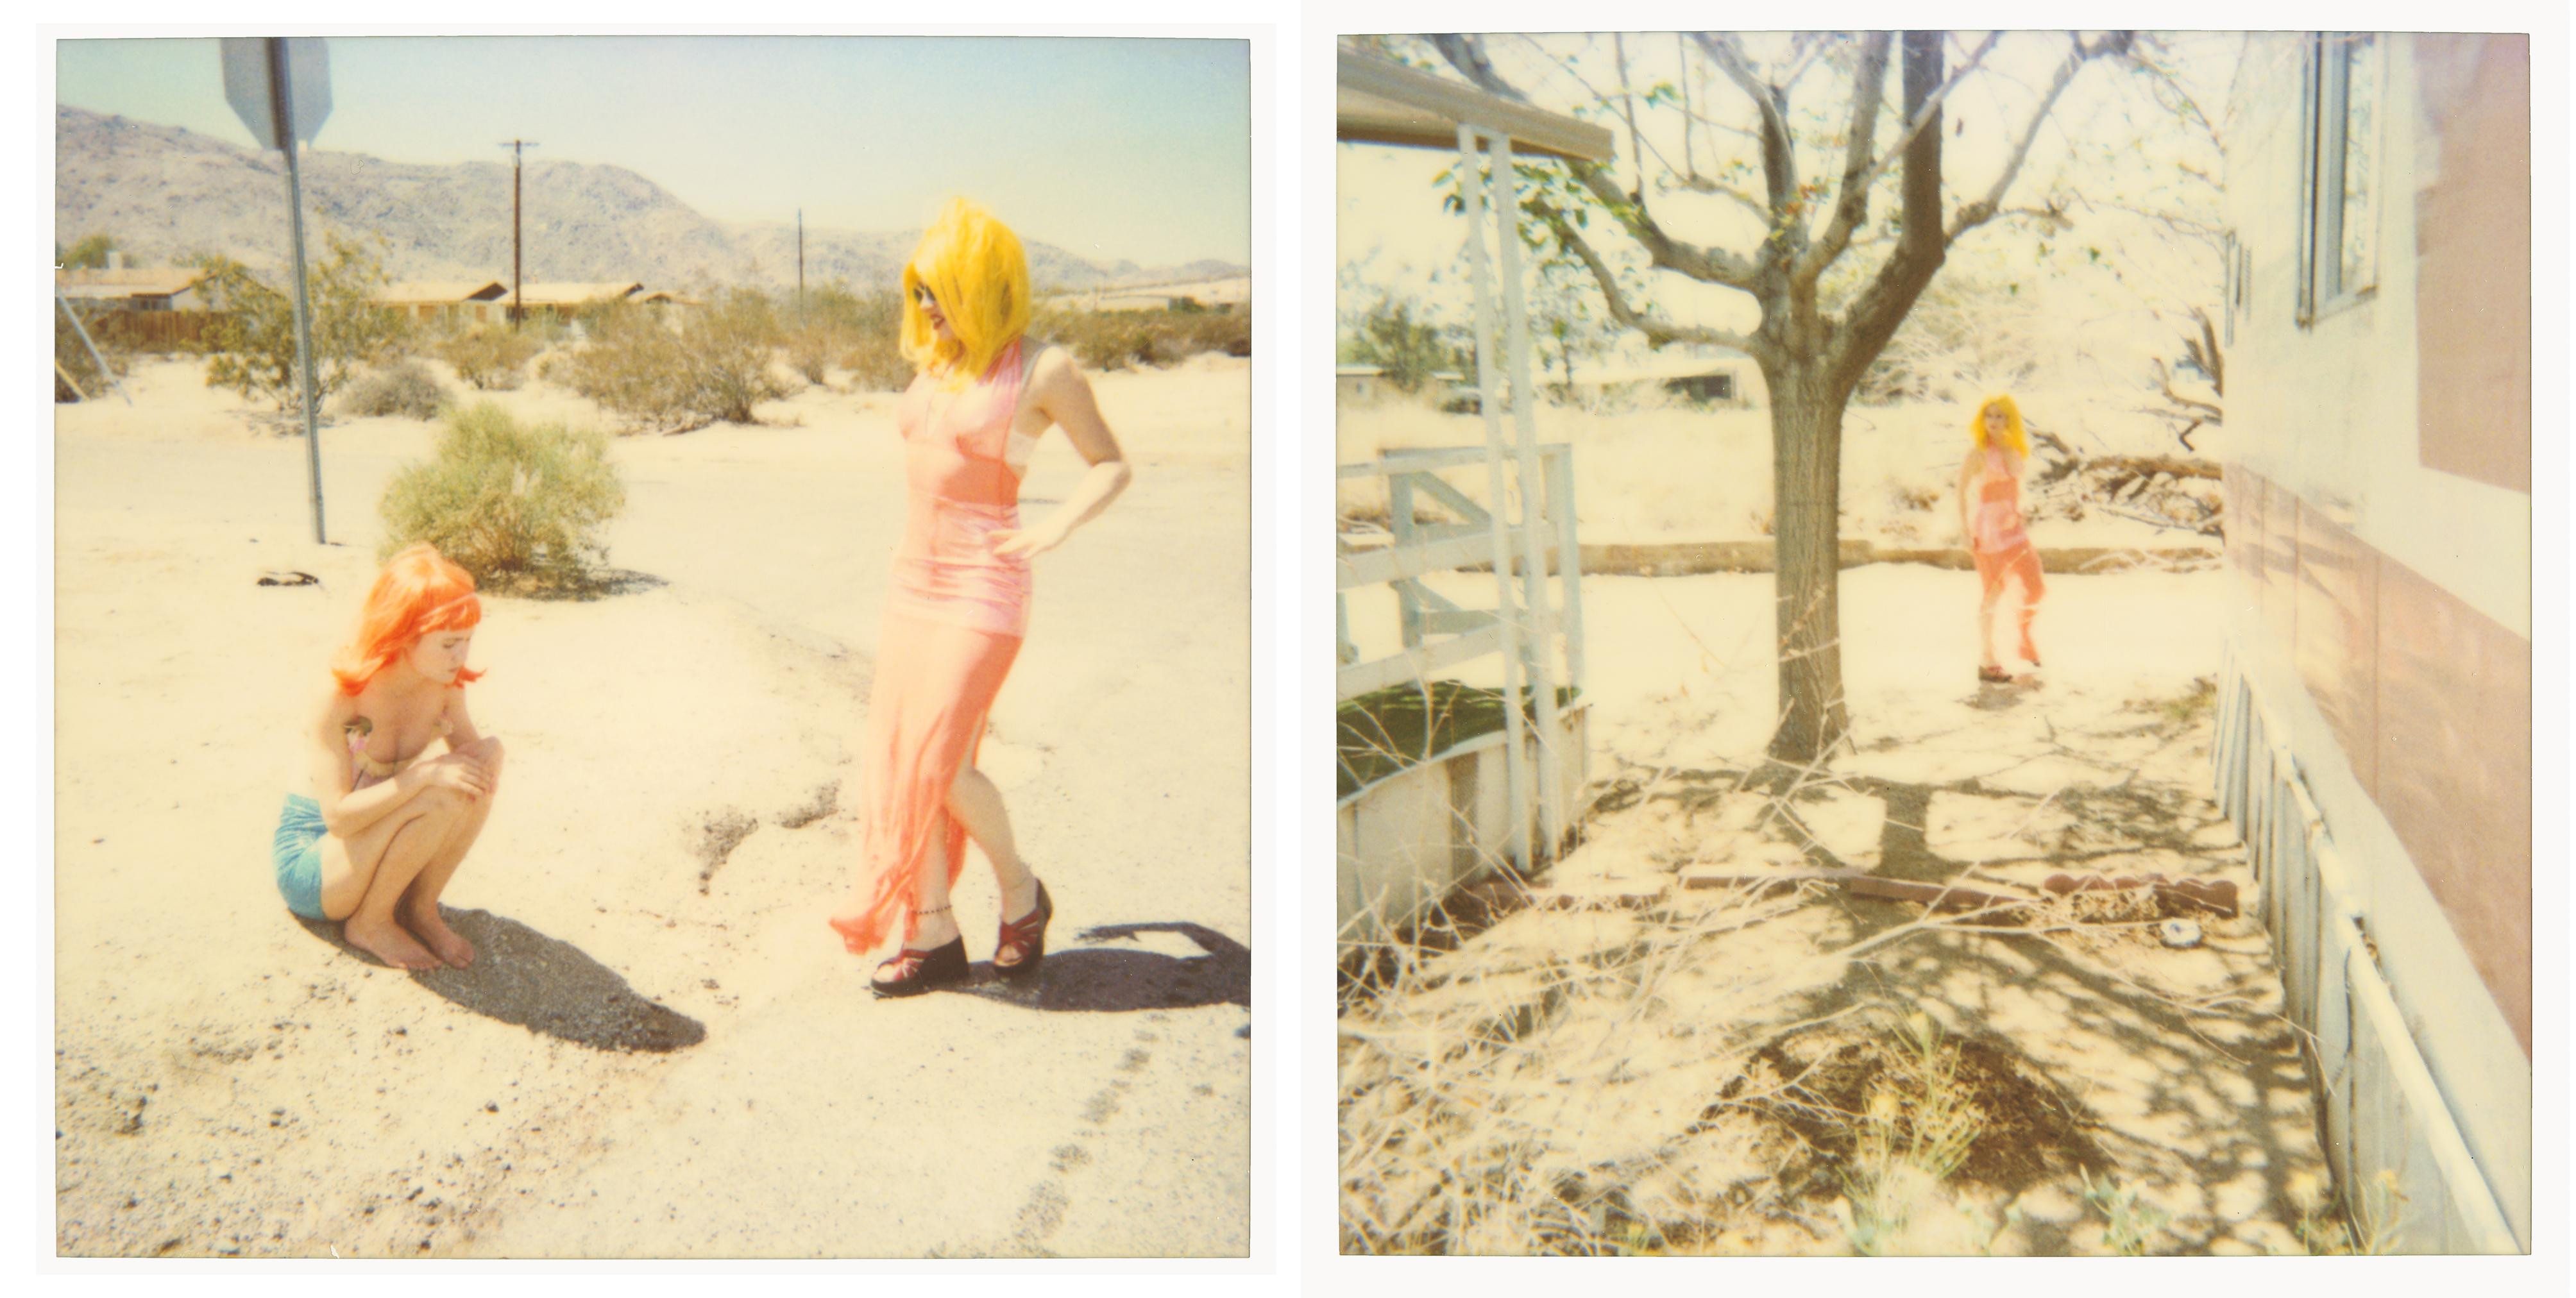 Radha and Max on Dirt Road (29 Palms, CA) - analogique, Polaroid, contemporain